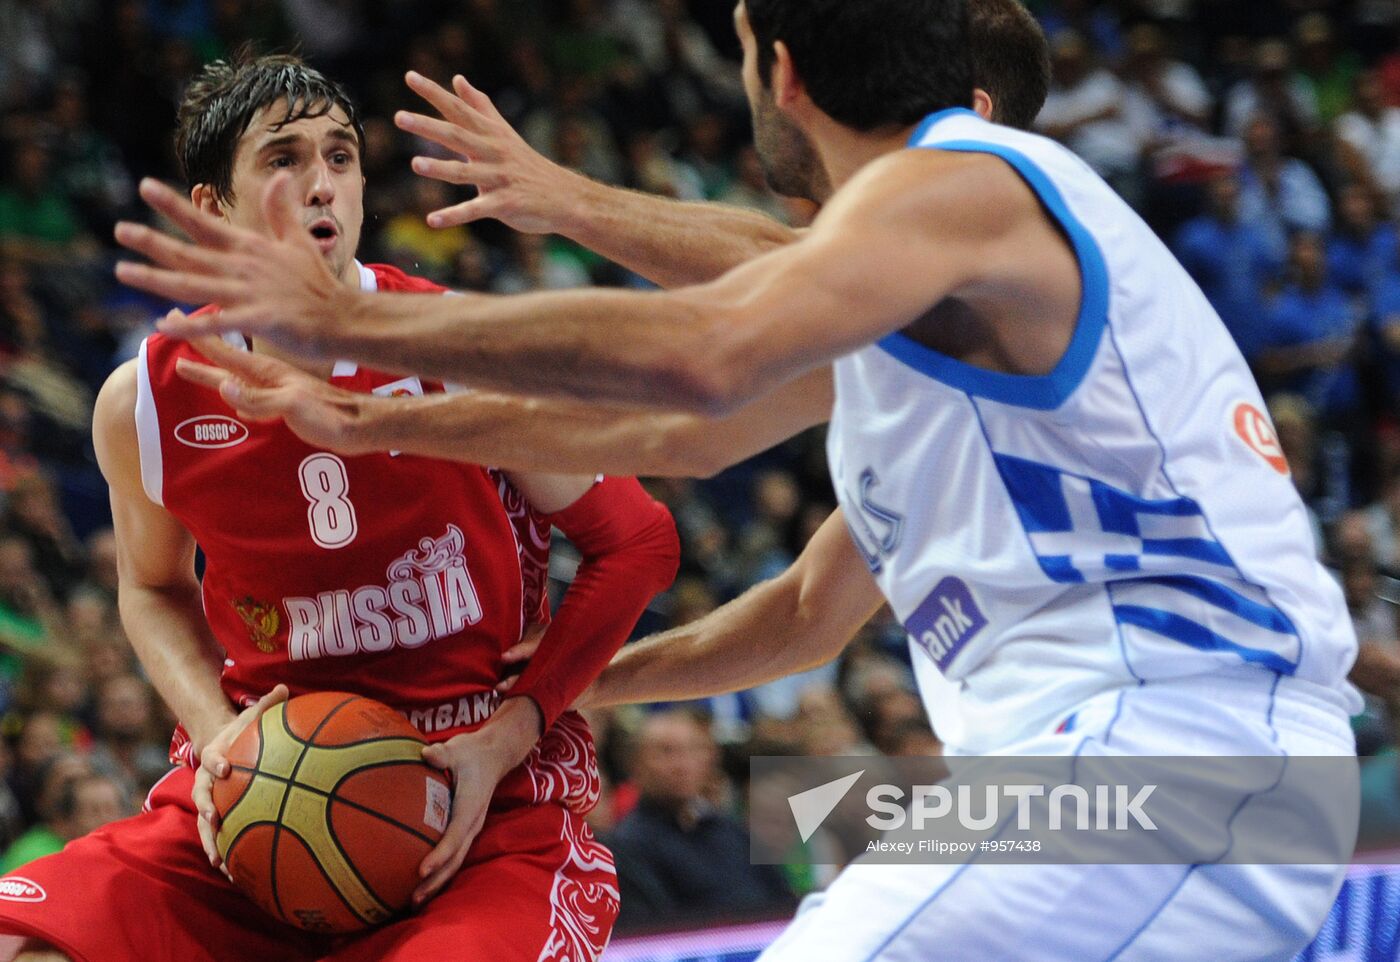 EuroBasket 2011. Greece vs. Russia